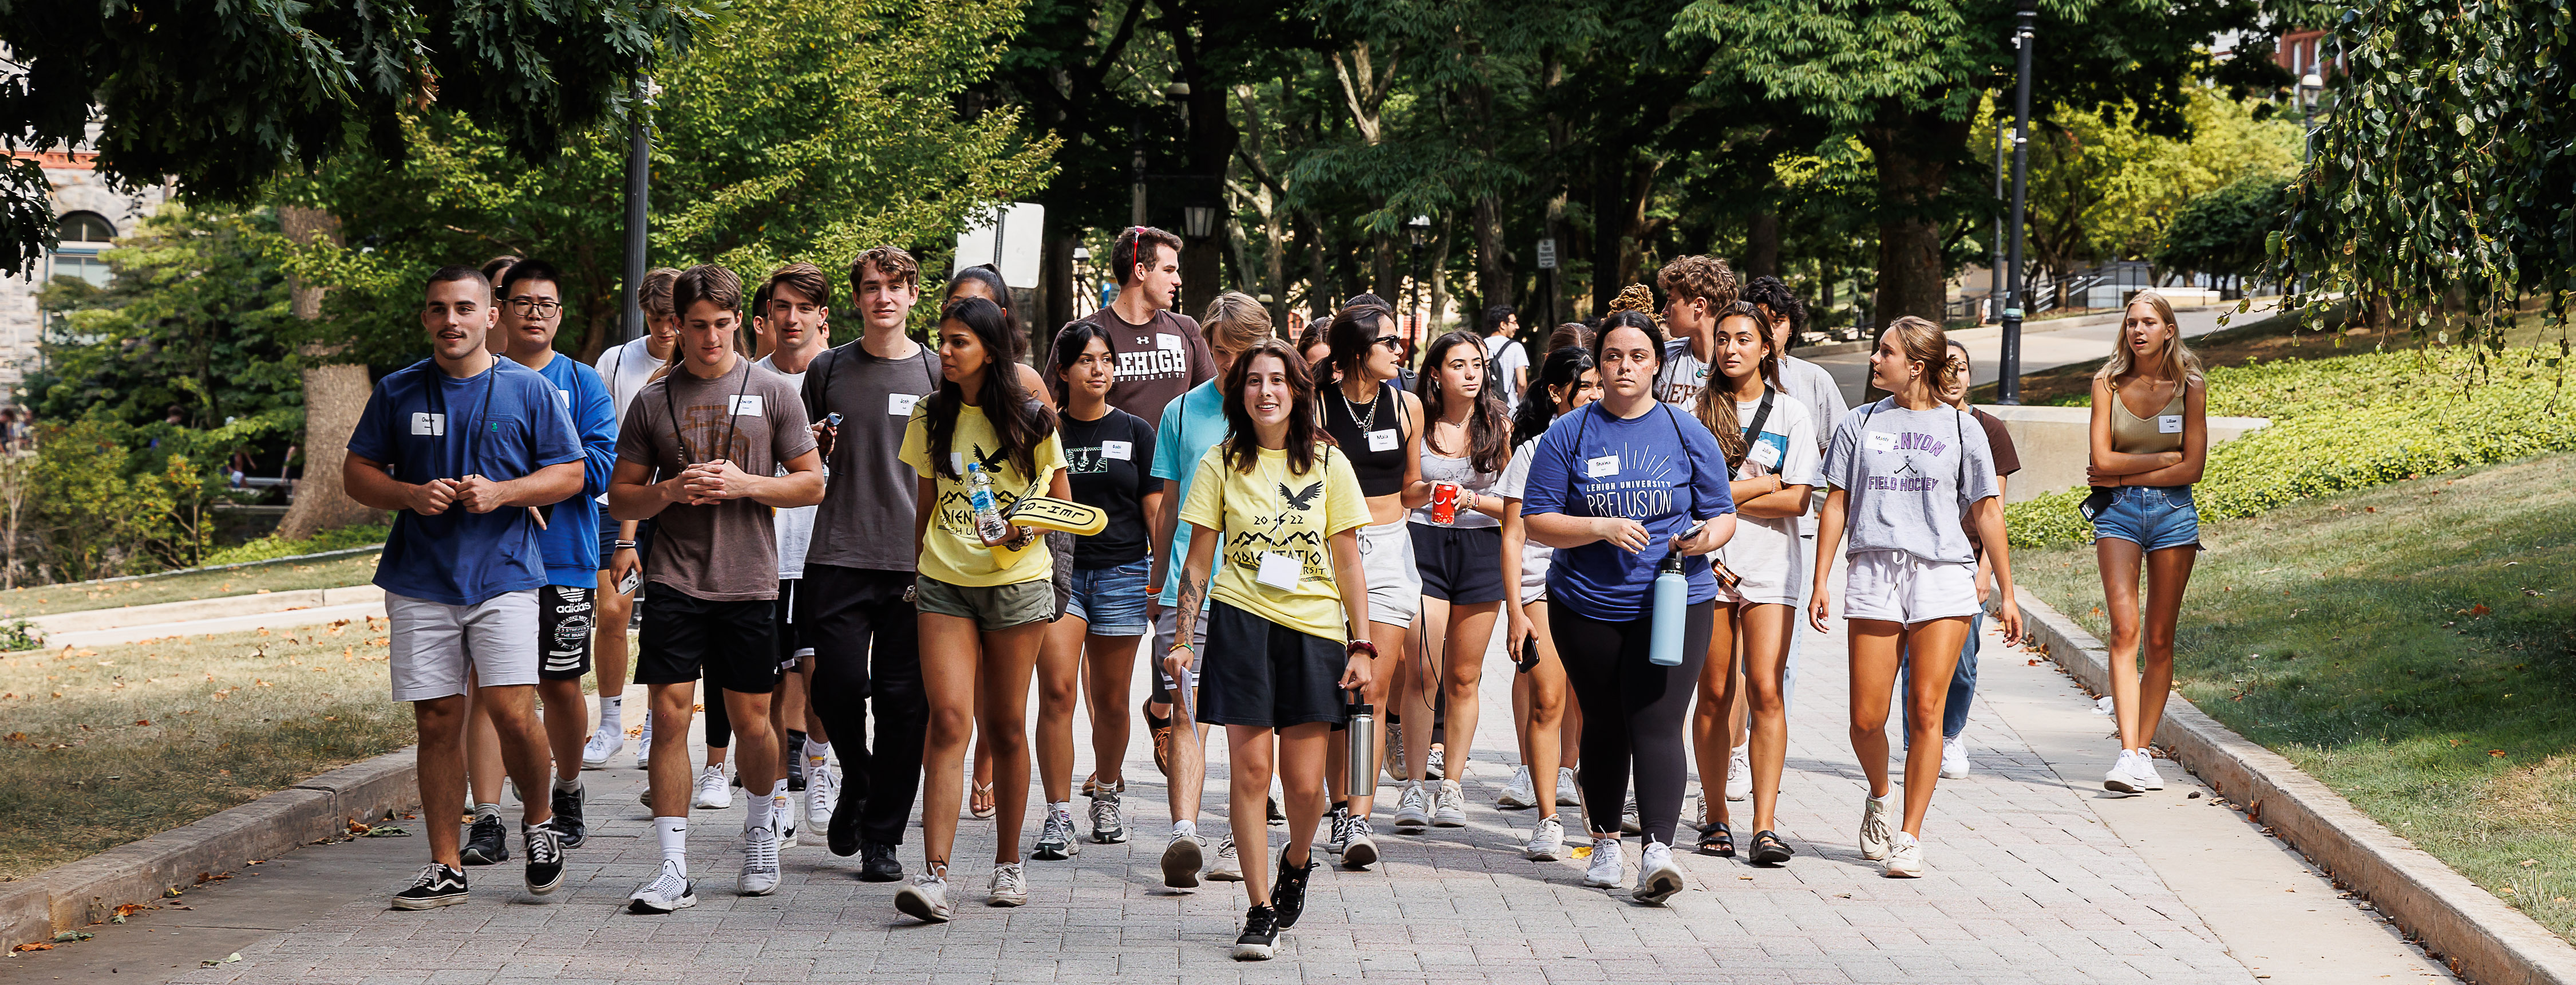 Orientation Groups walking on campus